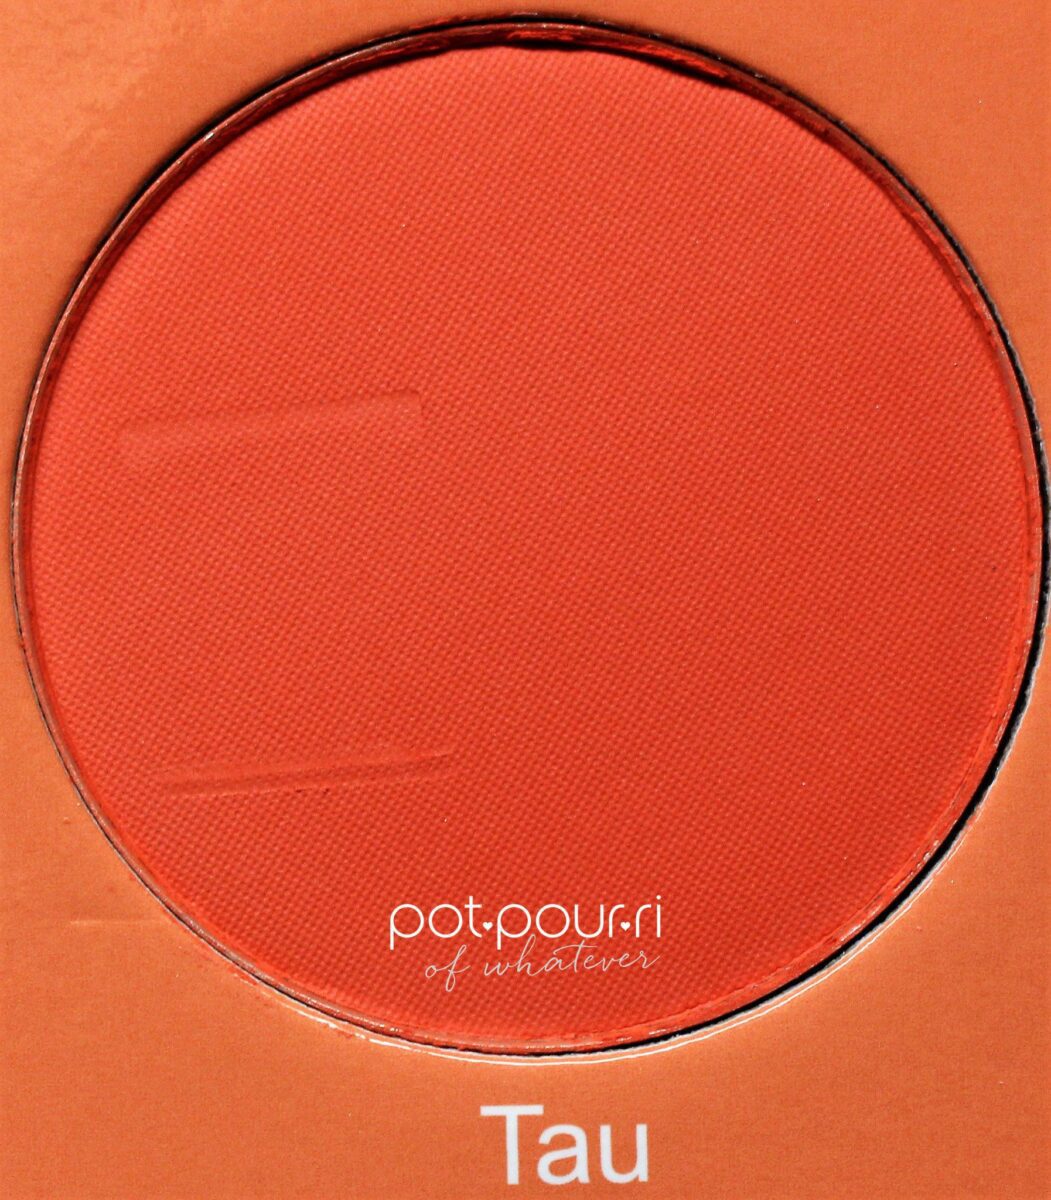 Juvia-saharan-blush-palette-volume-11-Tau-burnt-orange-matte